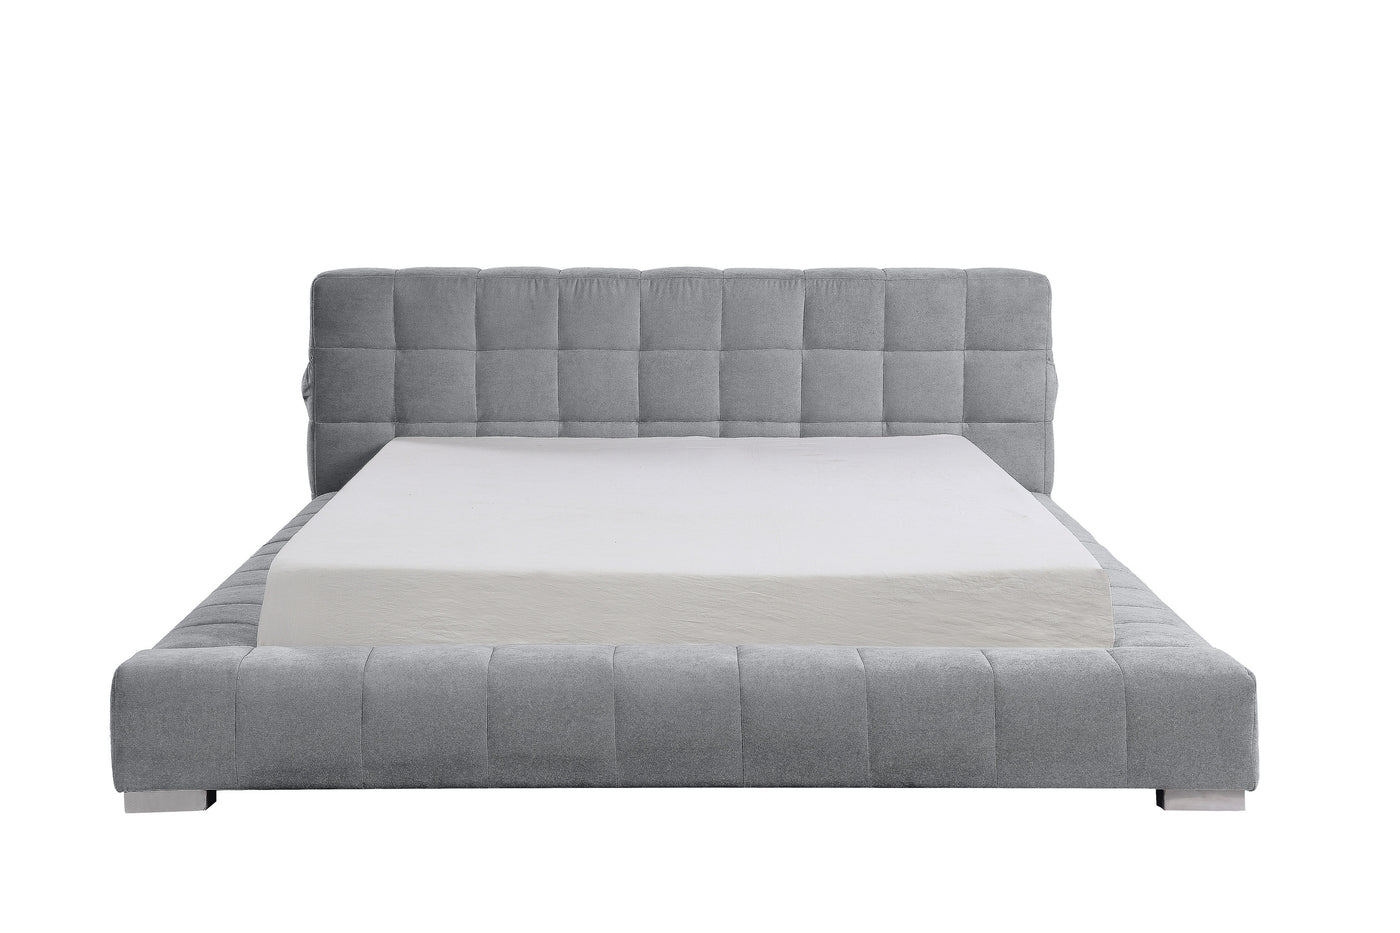 Modena 3-Piece Queen Bed - Grey